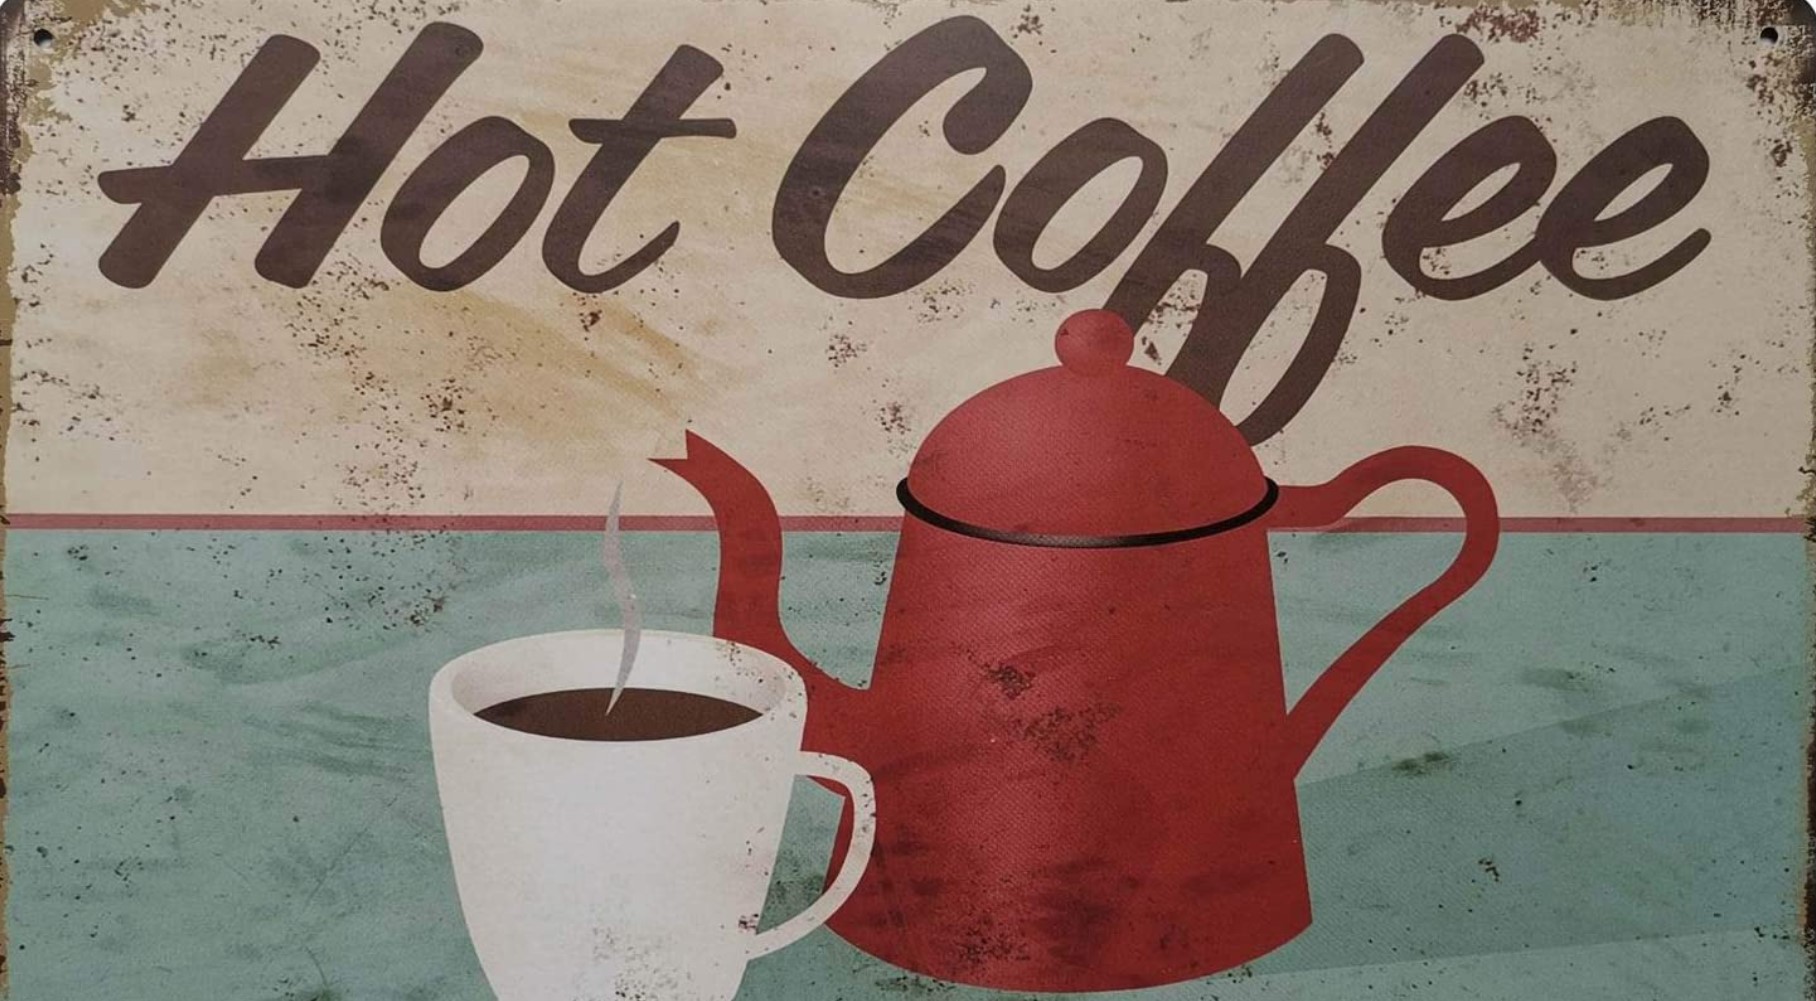 Coffee Memorabilia: Exploring Vintage Coffee Ads and Collectibles